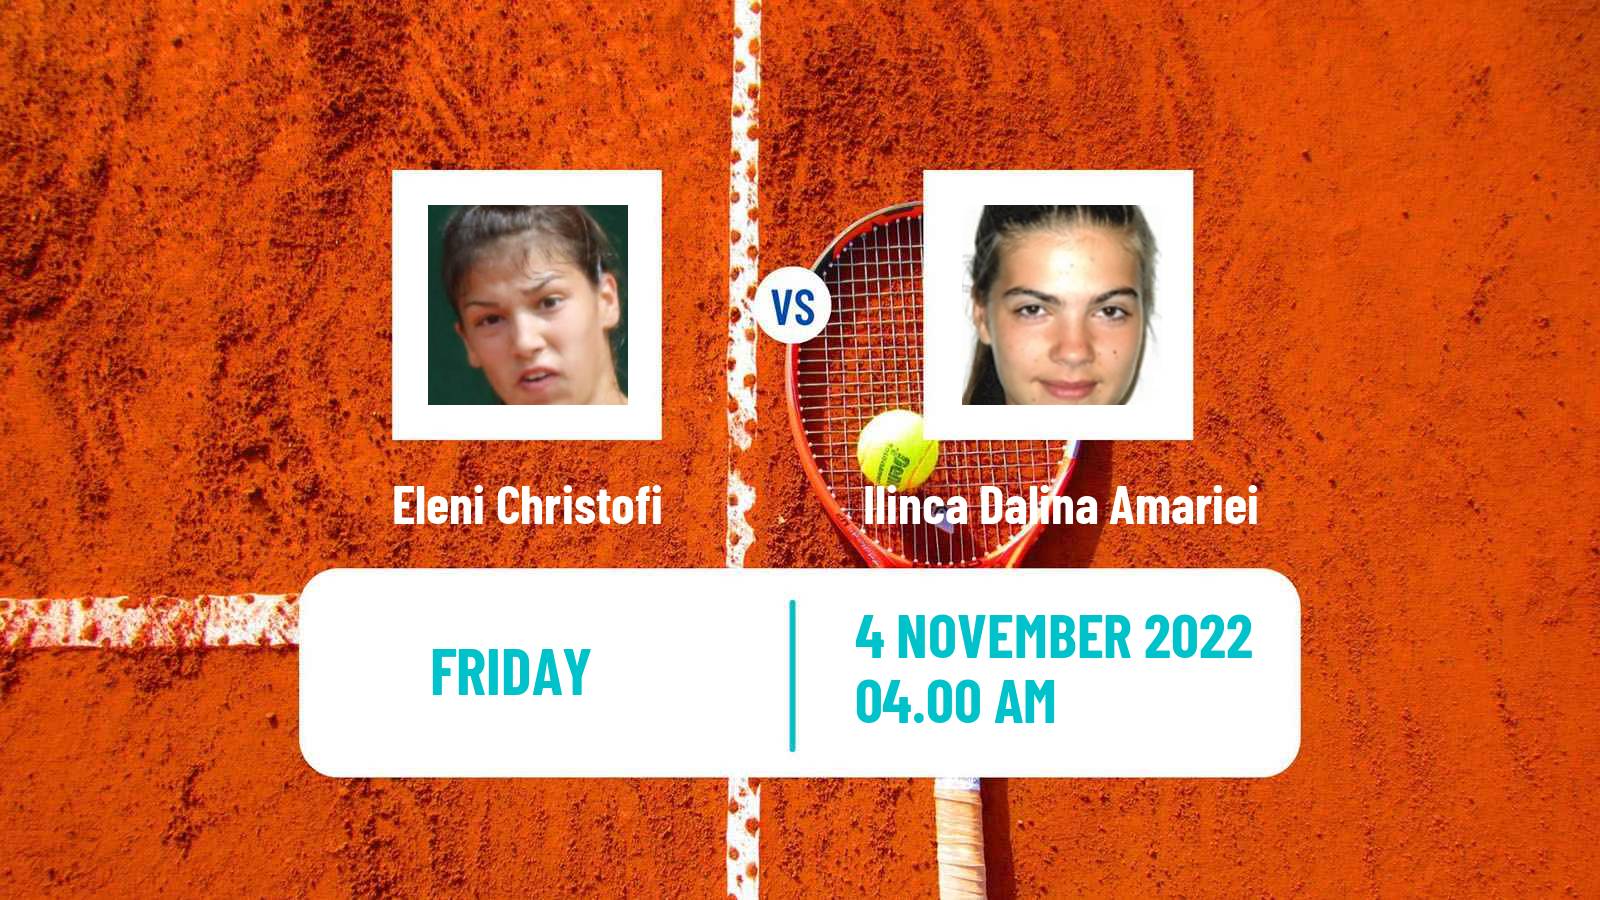 Tennis ITF Tournaments Eleni Christofi - Ilinca Dalina Amariei